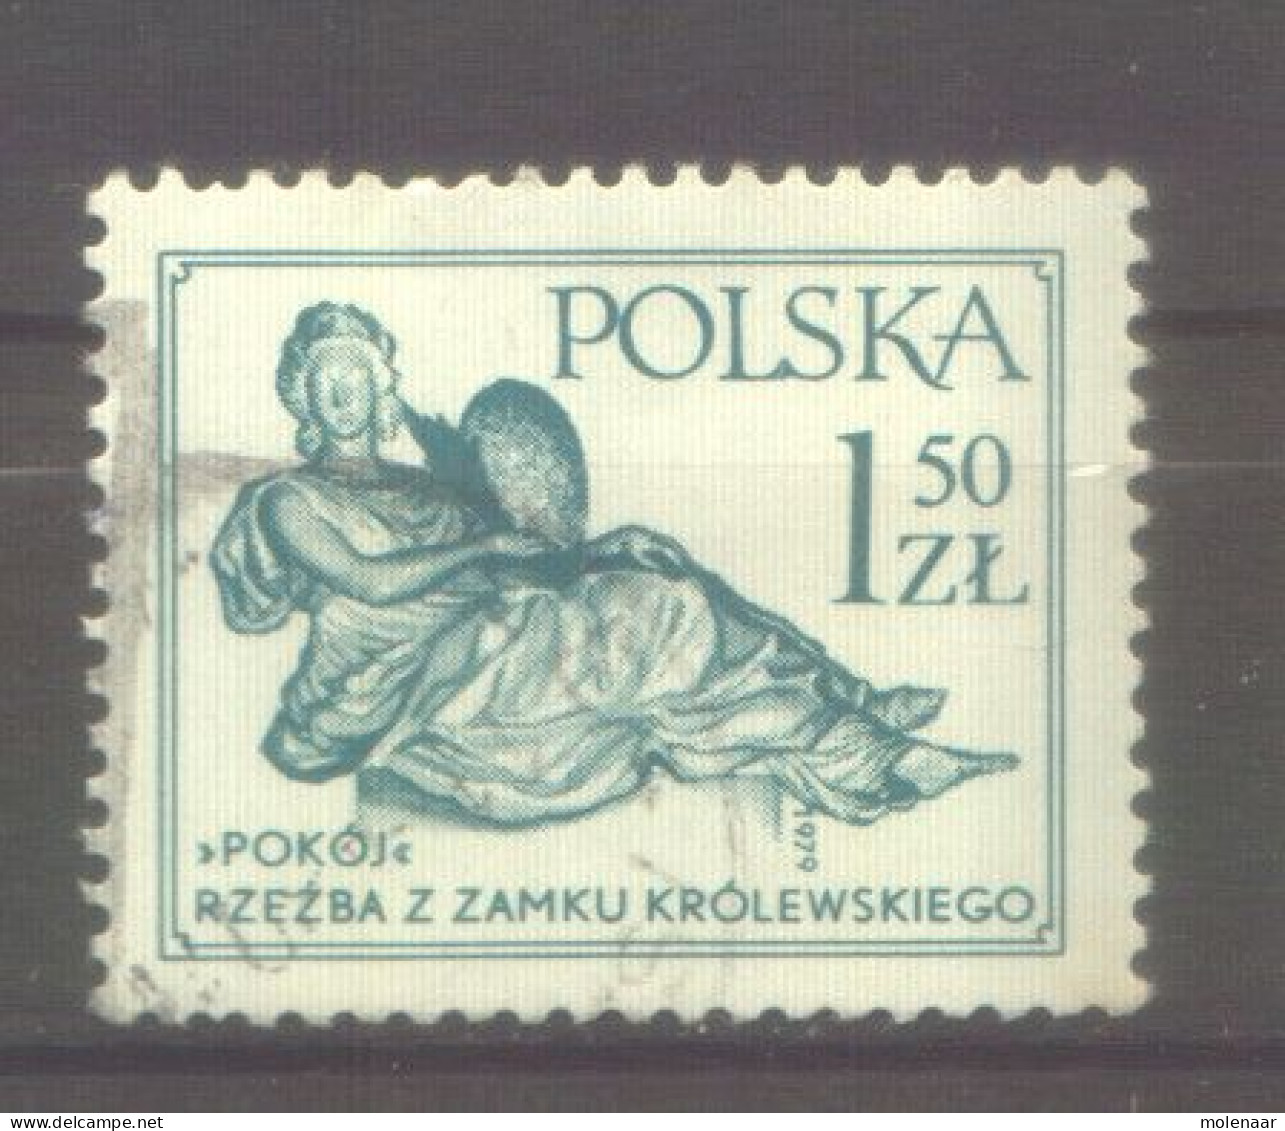 Postzegels > Europa > Polen > 1944-.... Republiek > 1971-80 > Gebruikt No. 2625  (12165) - Gebraucht